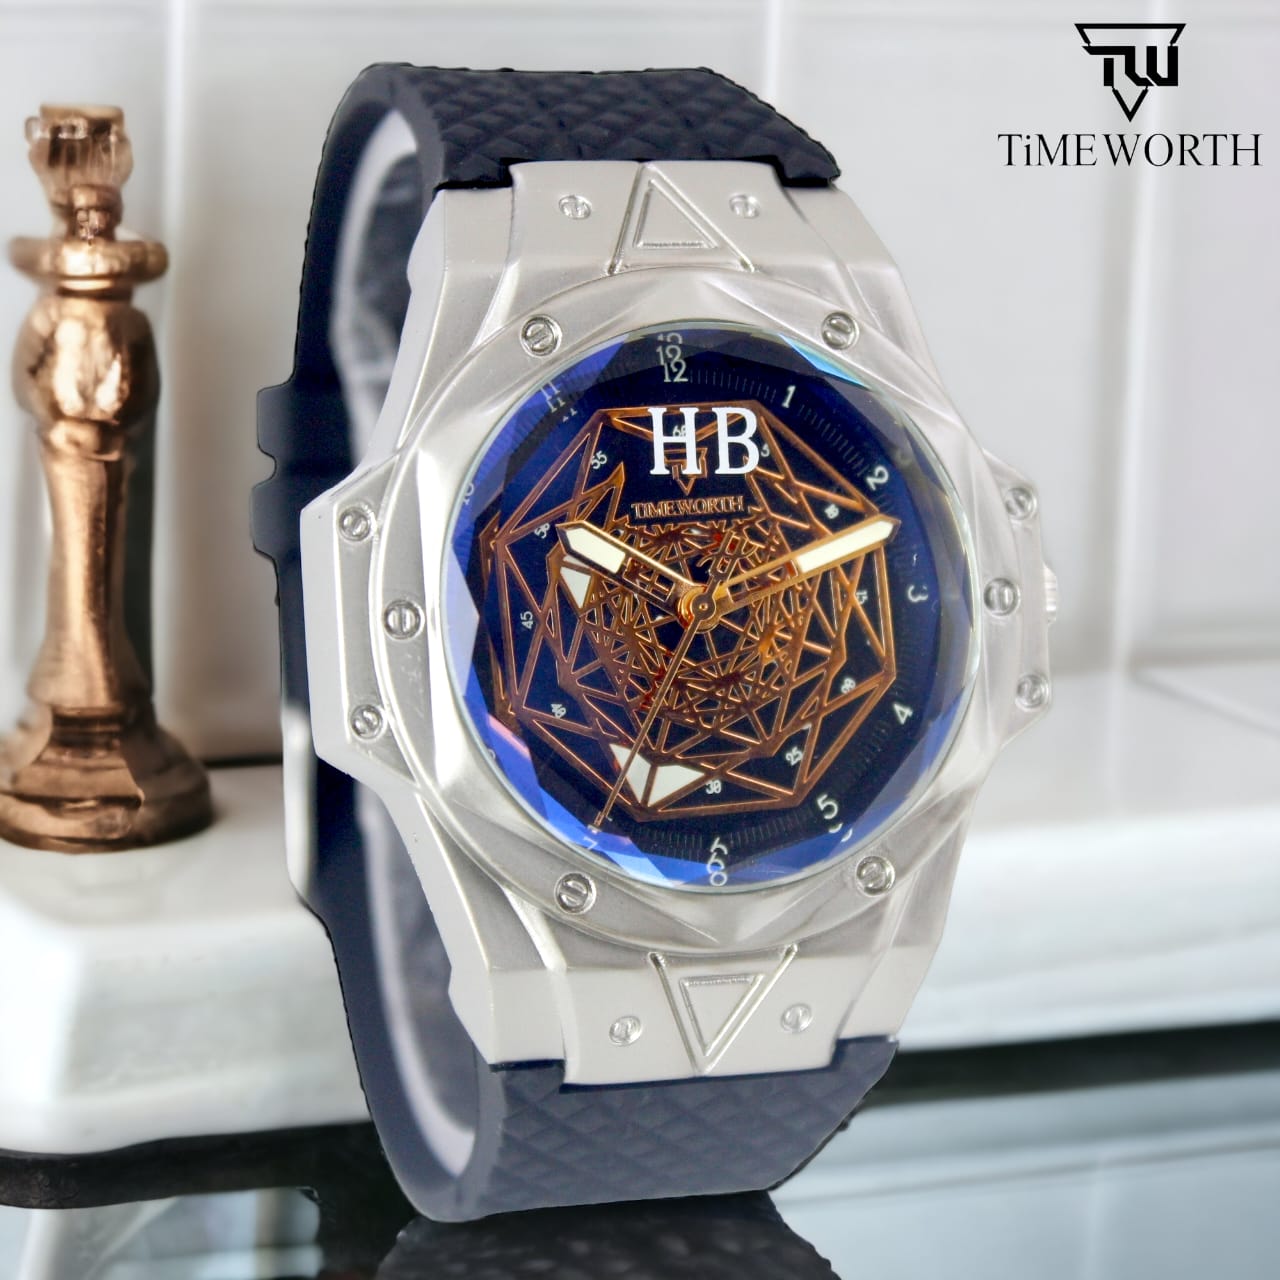 Timeworth Stylish Round Dial Watch